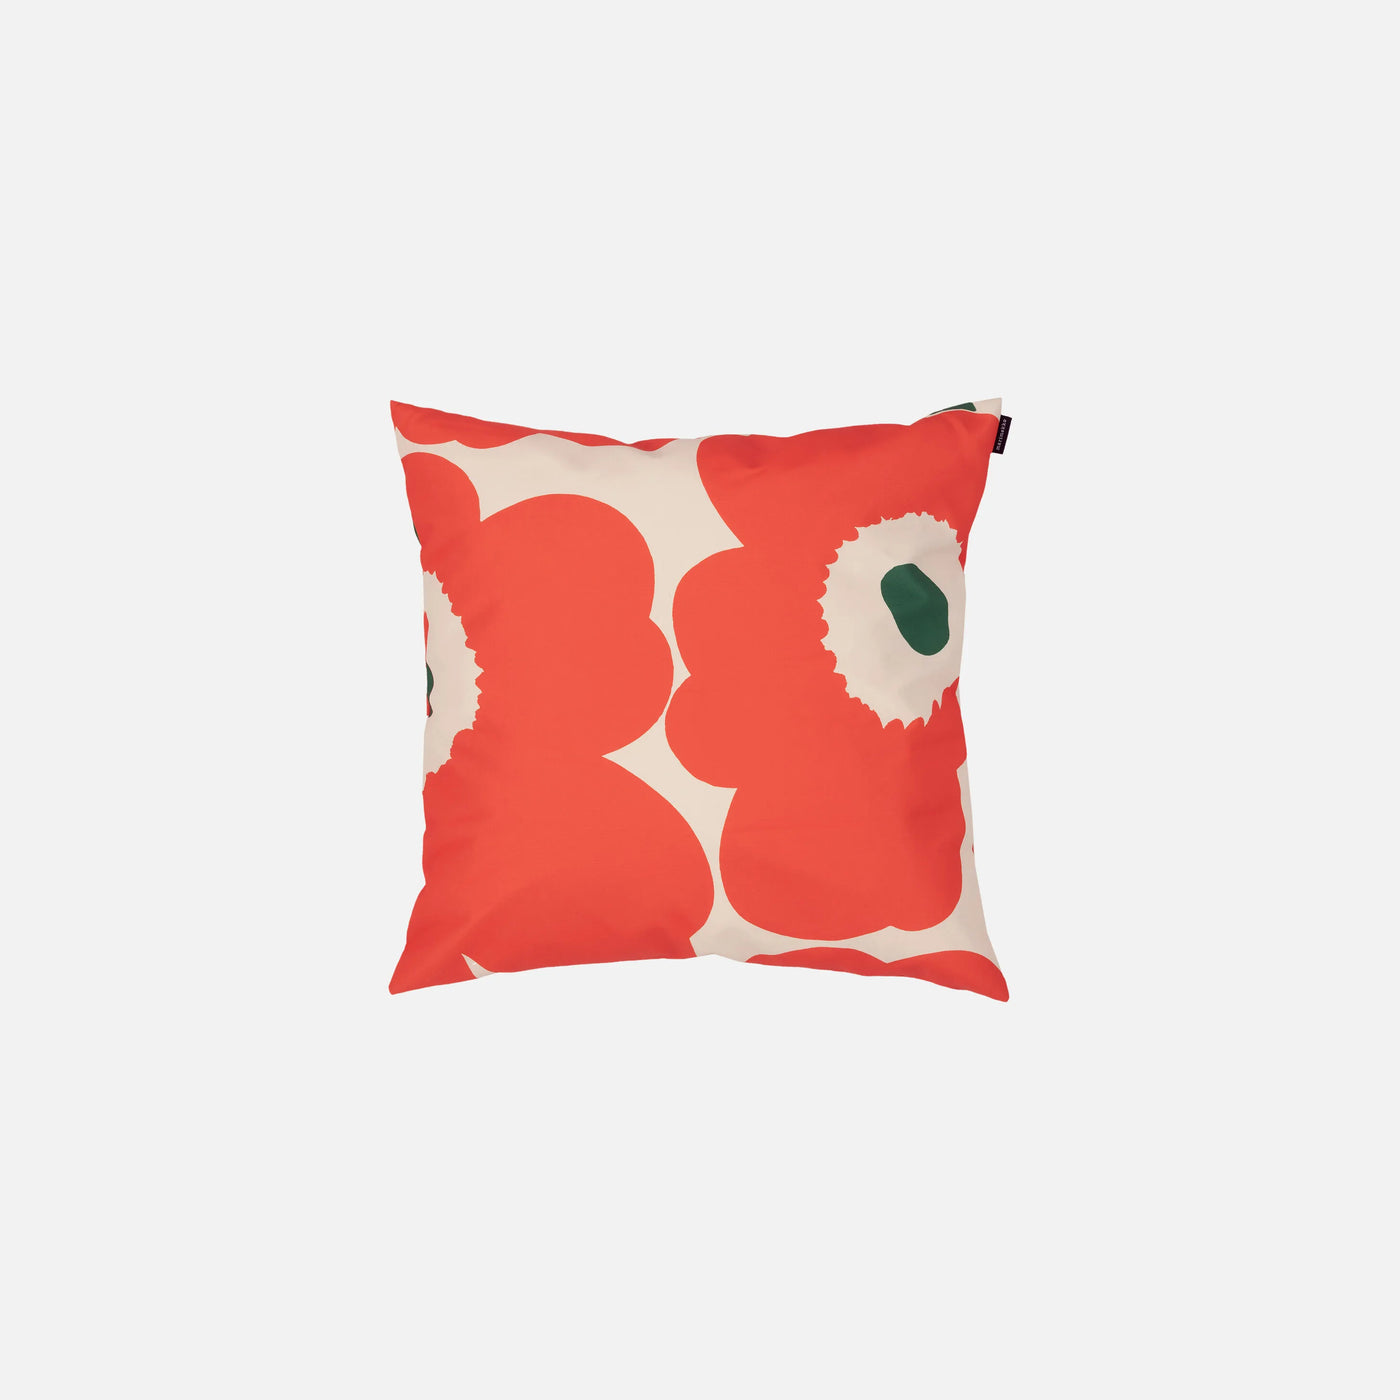 Unikko Cushion Cover 50x50 Cm - orange, green